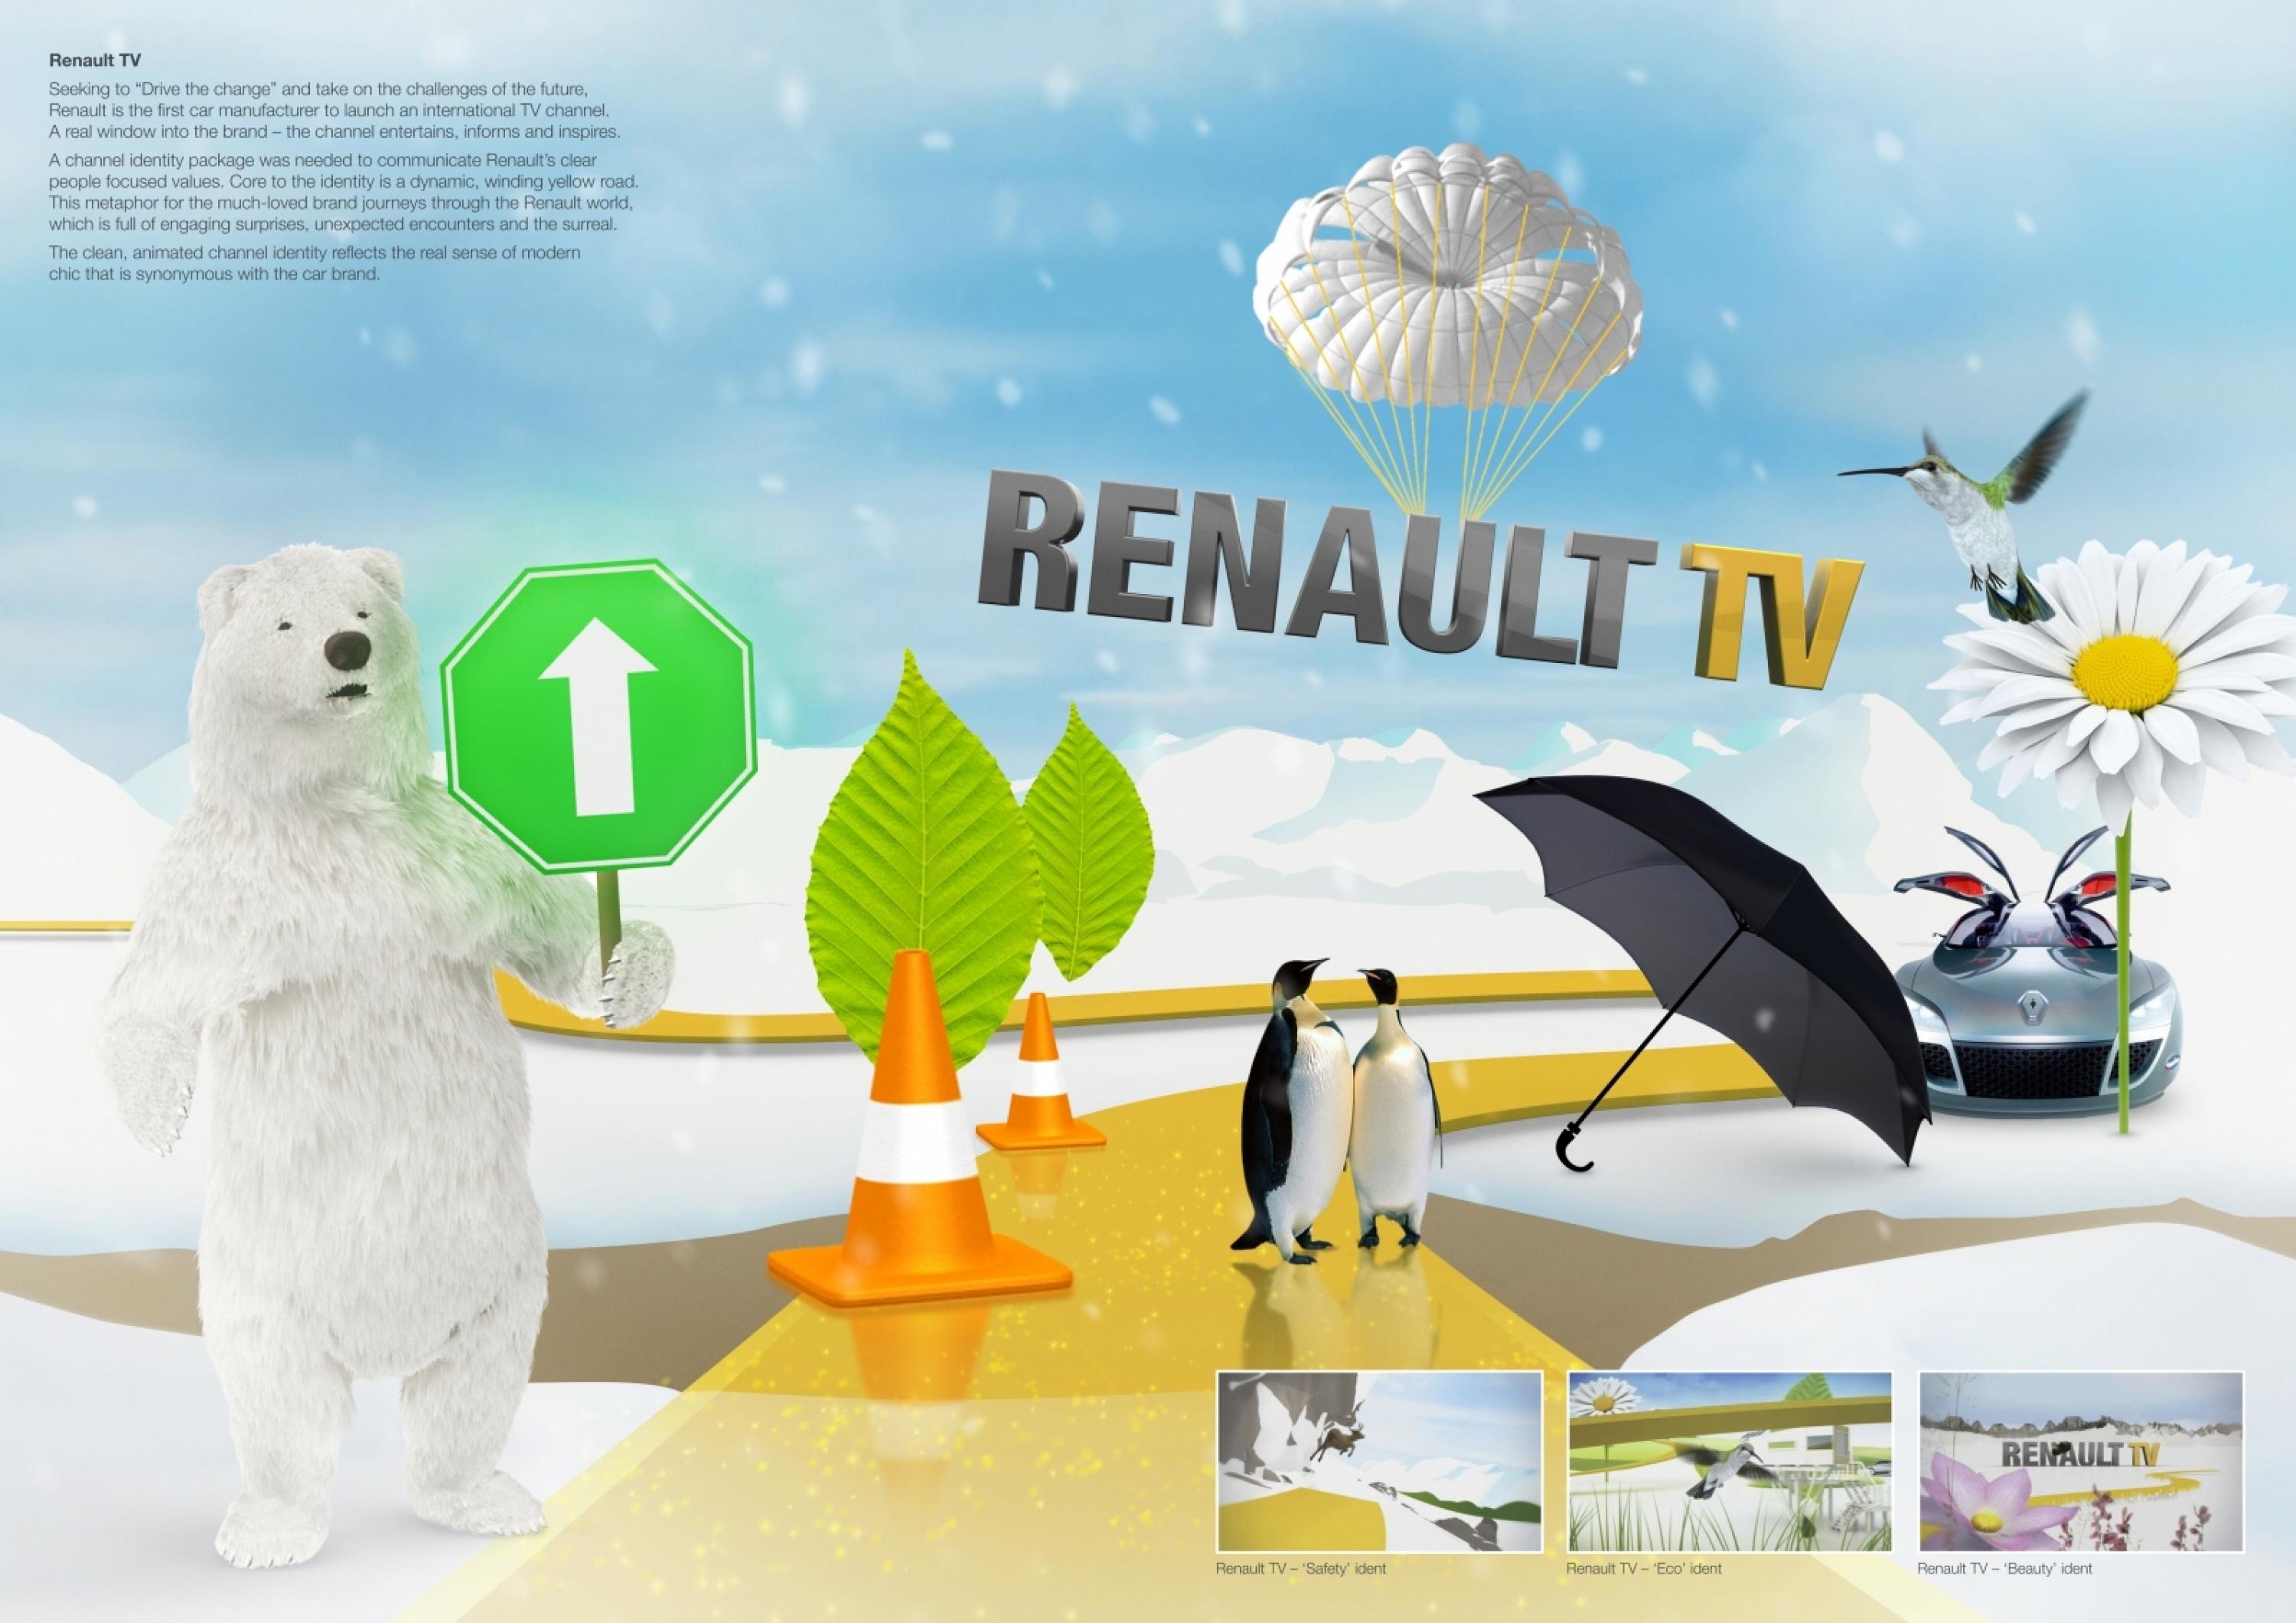 RENAULT TV IDENTS